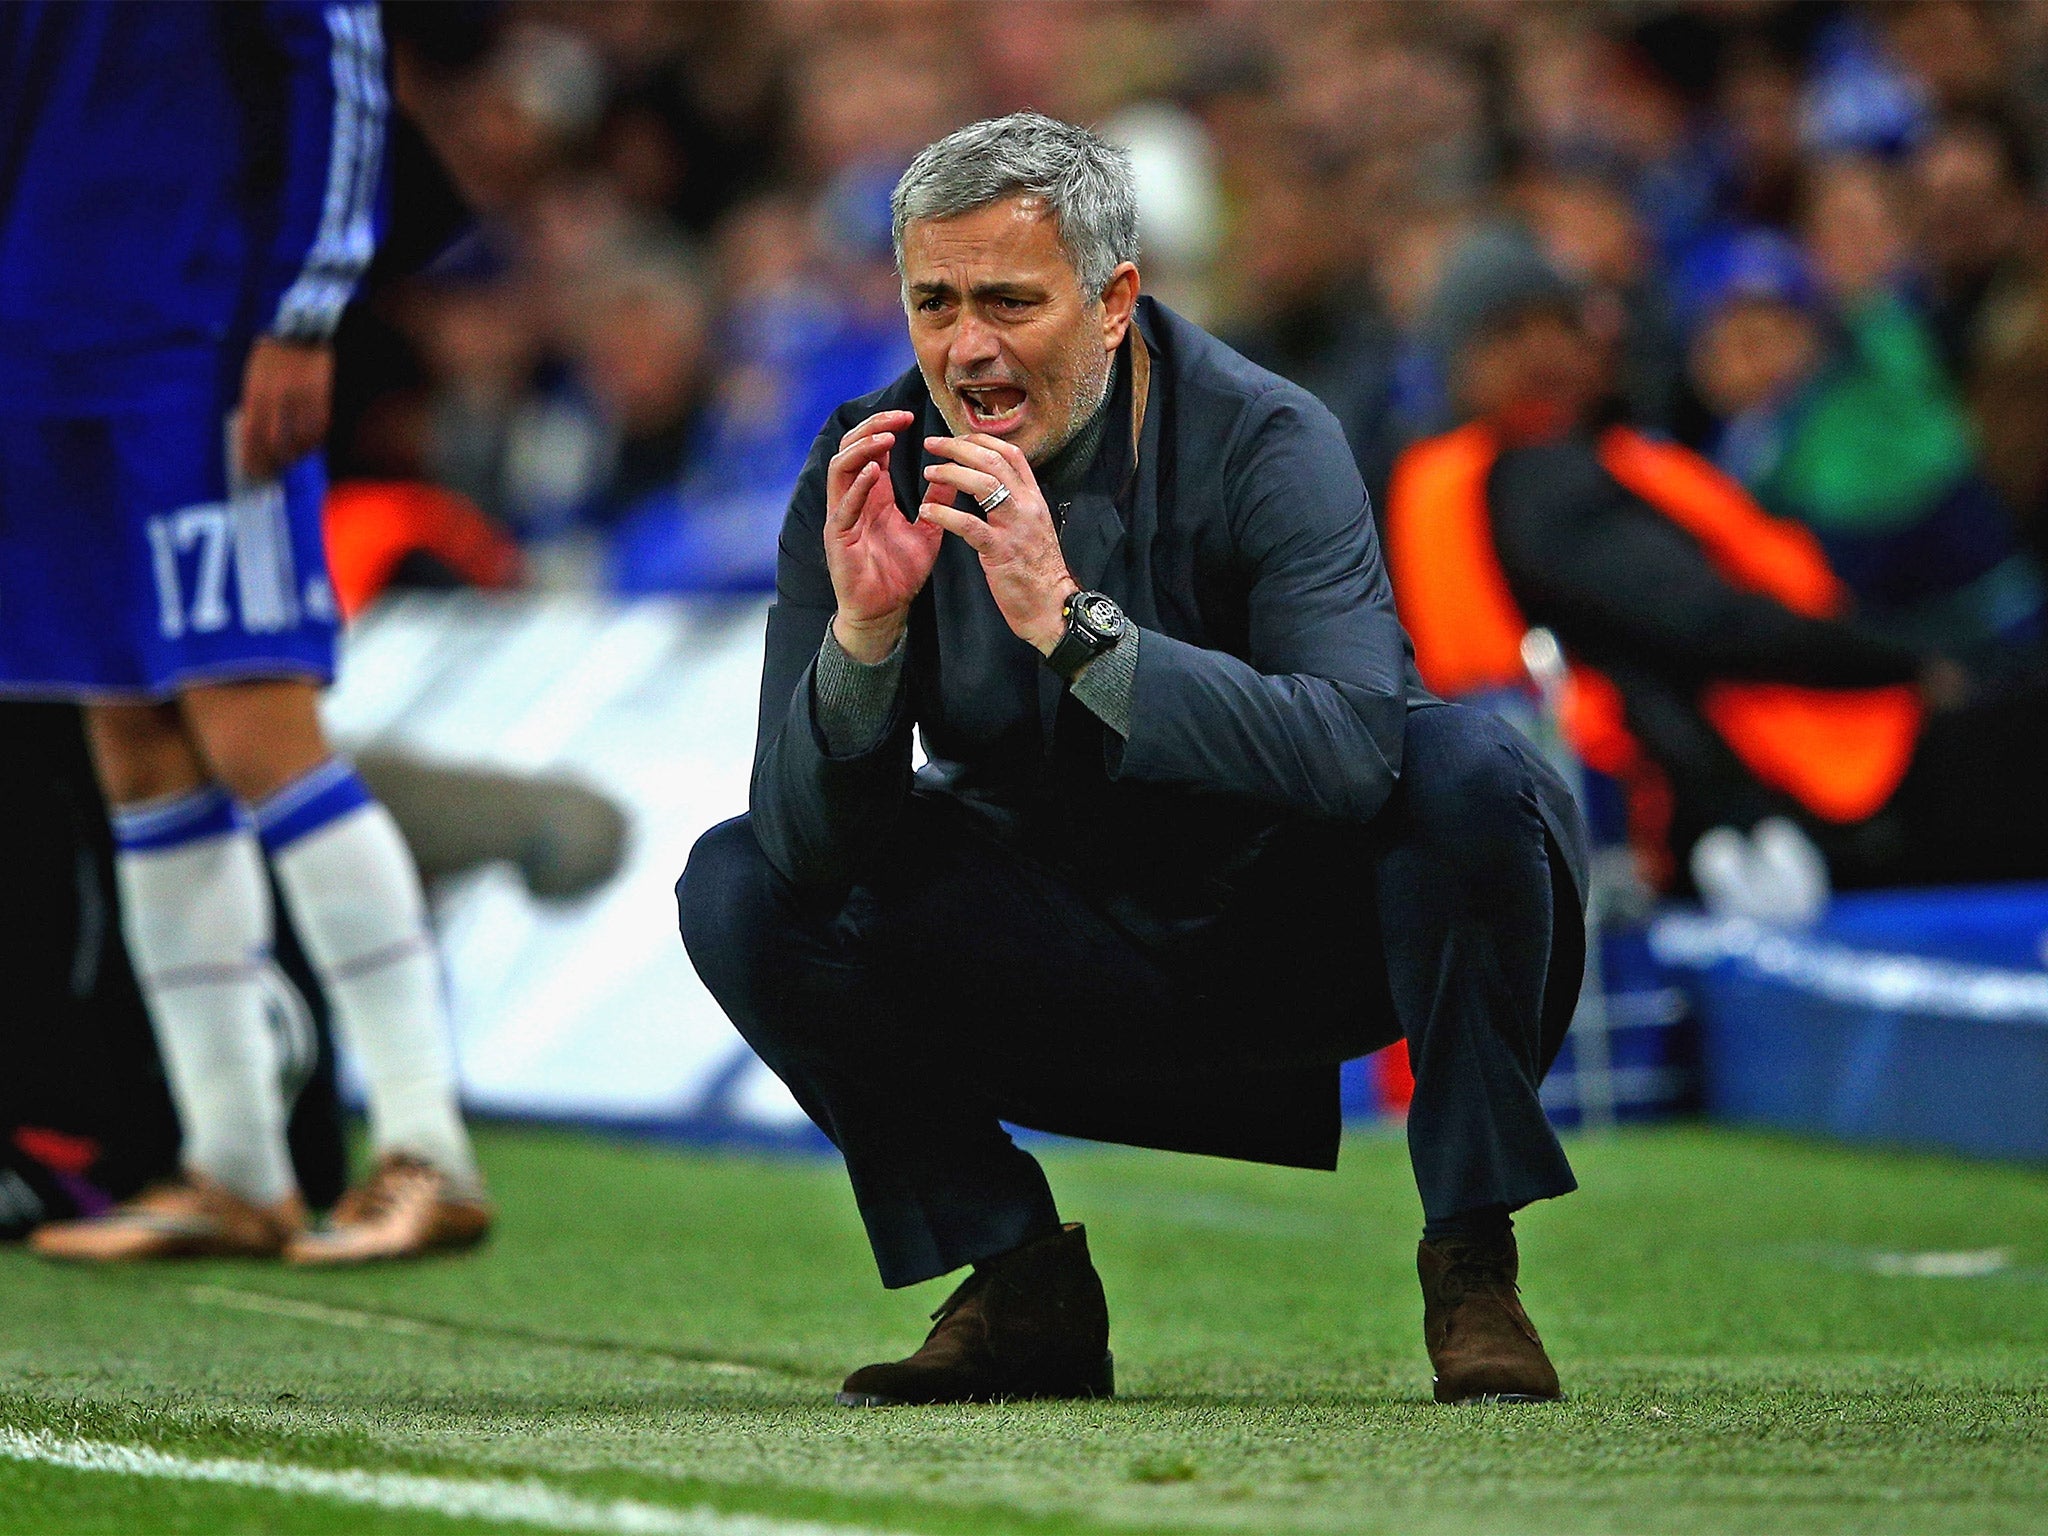 Jose Mourinho will no longer manager Chelsea